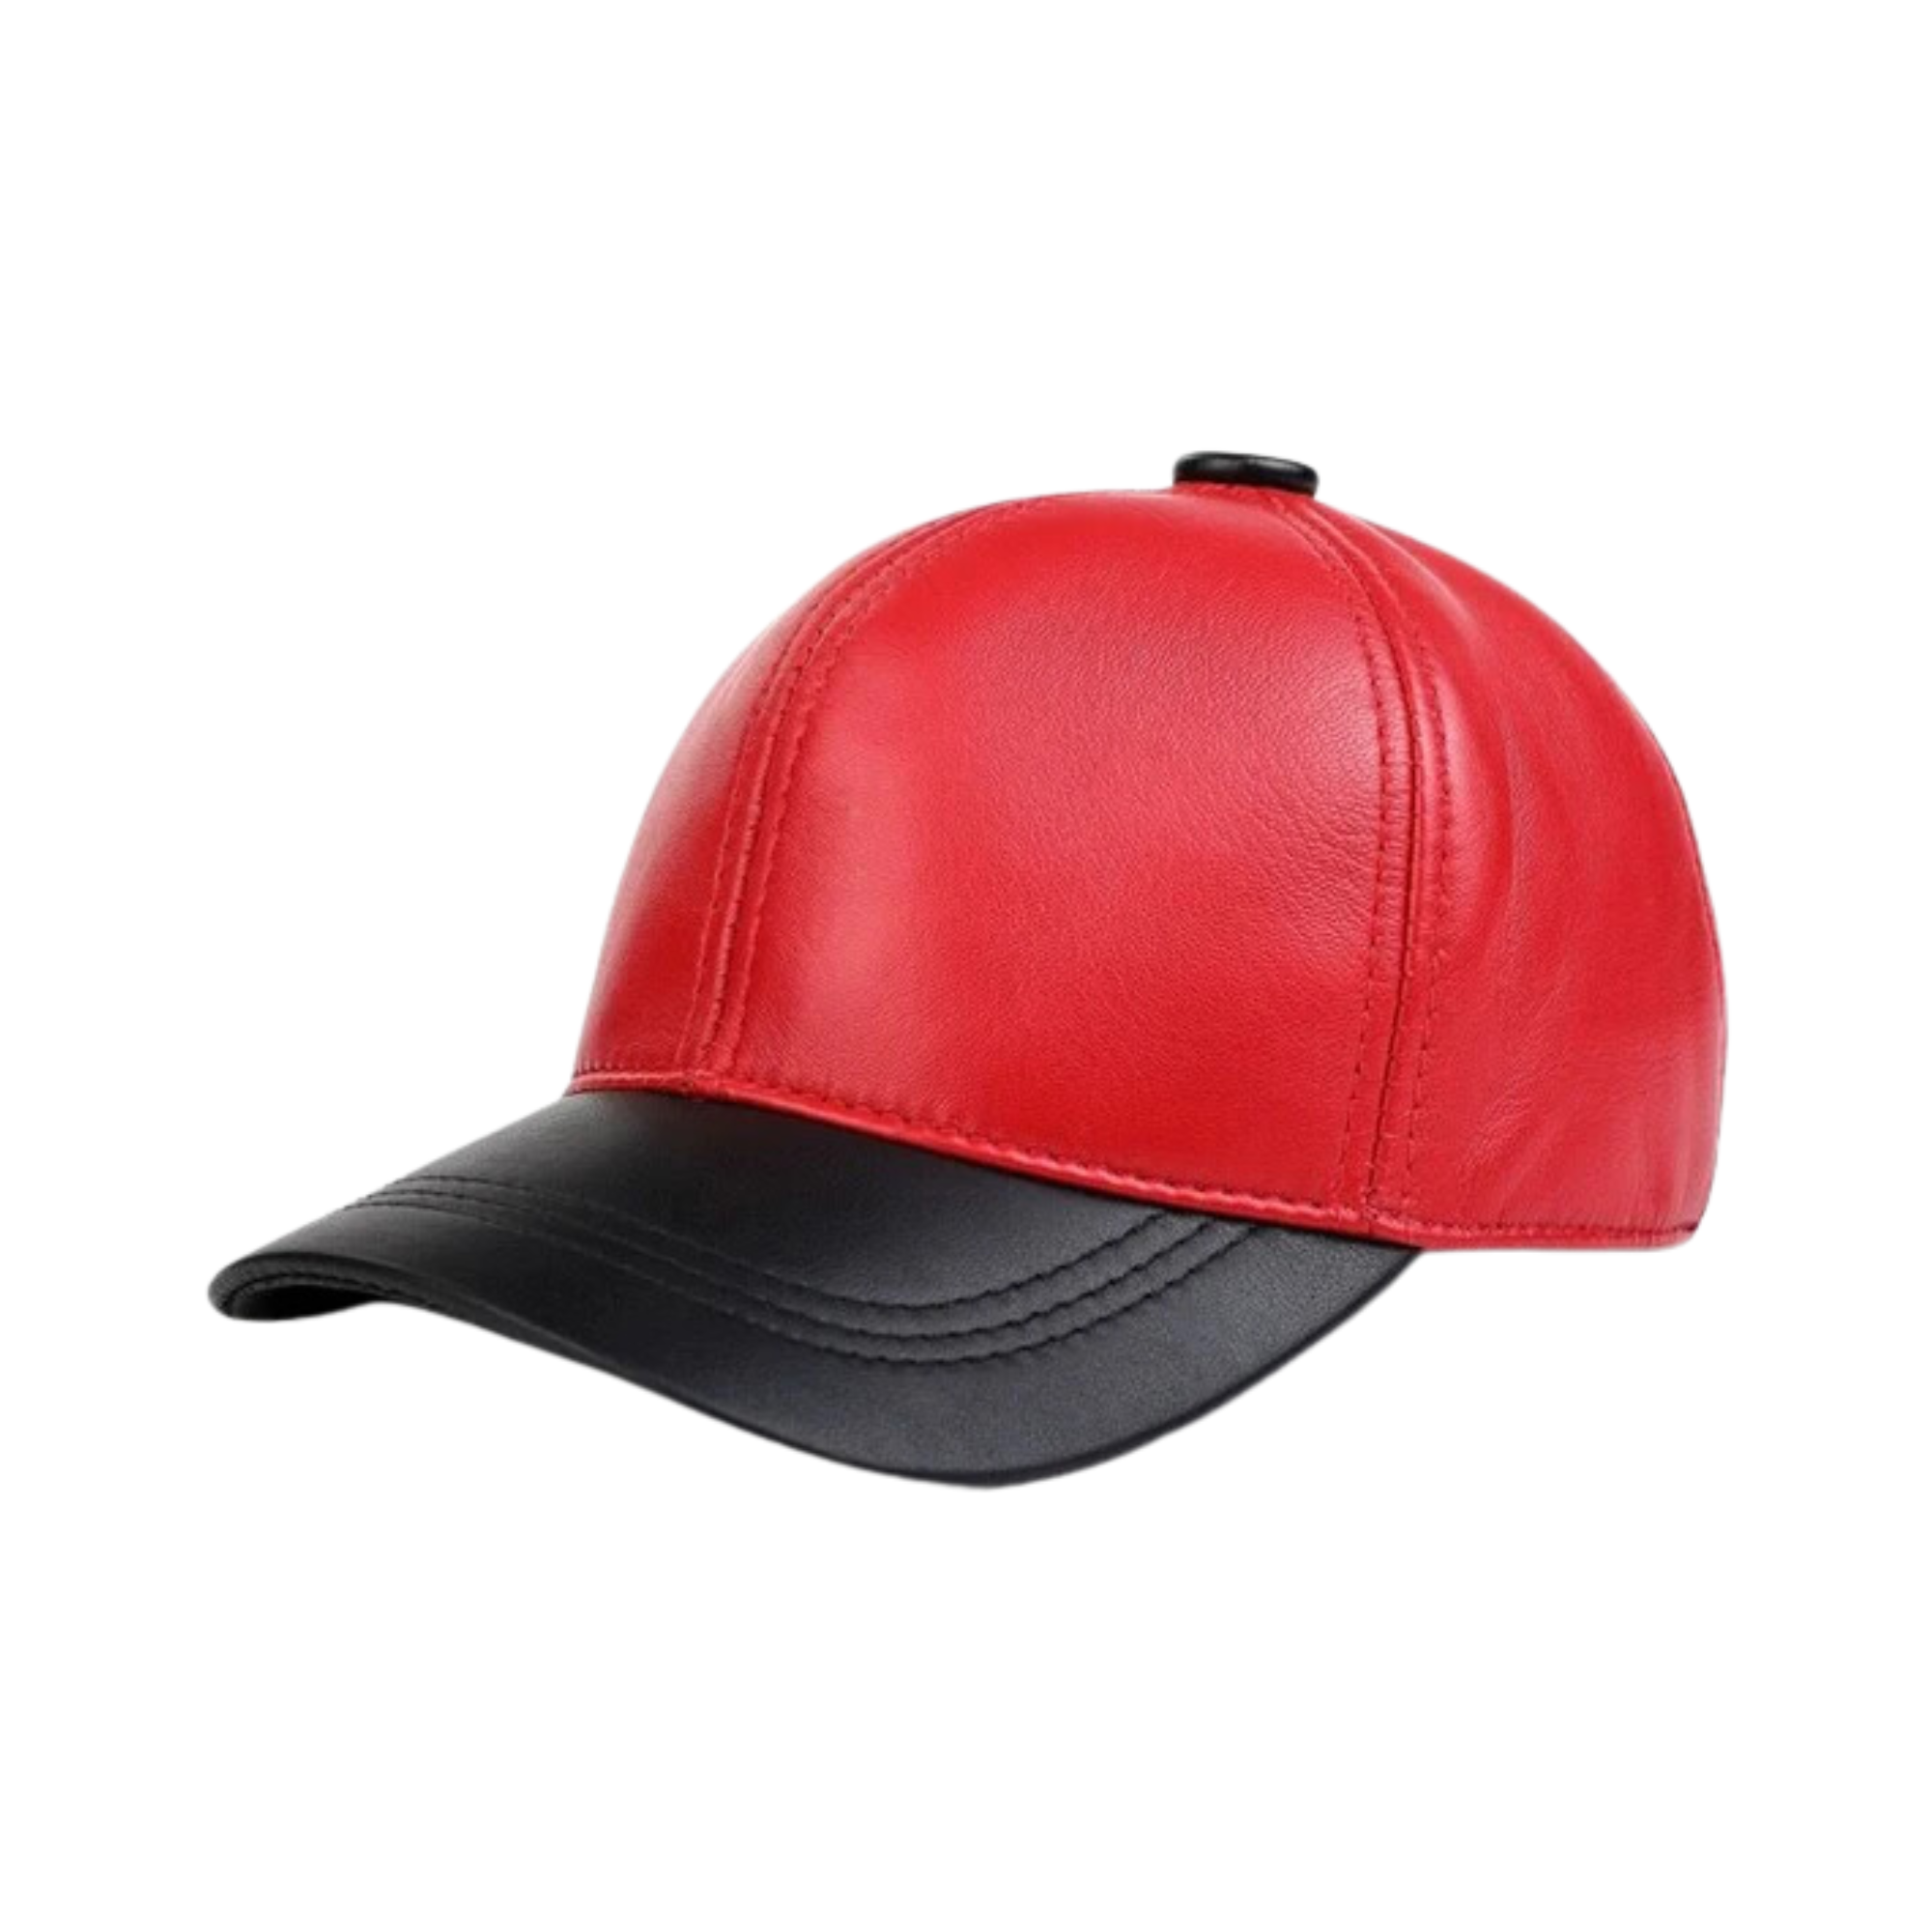 Dual Color Leather Baseball Cap  - Pre Order: Ships Feb 29